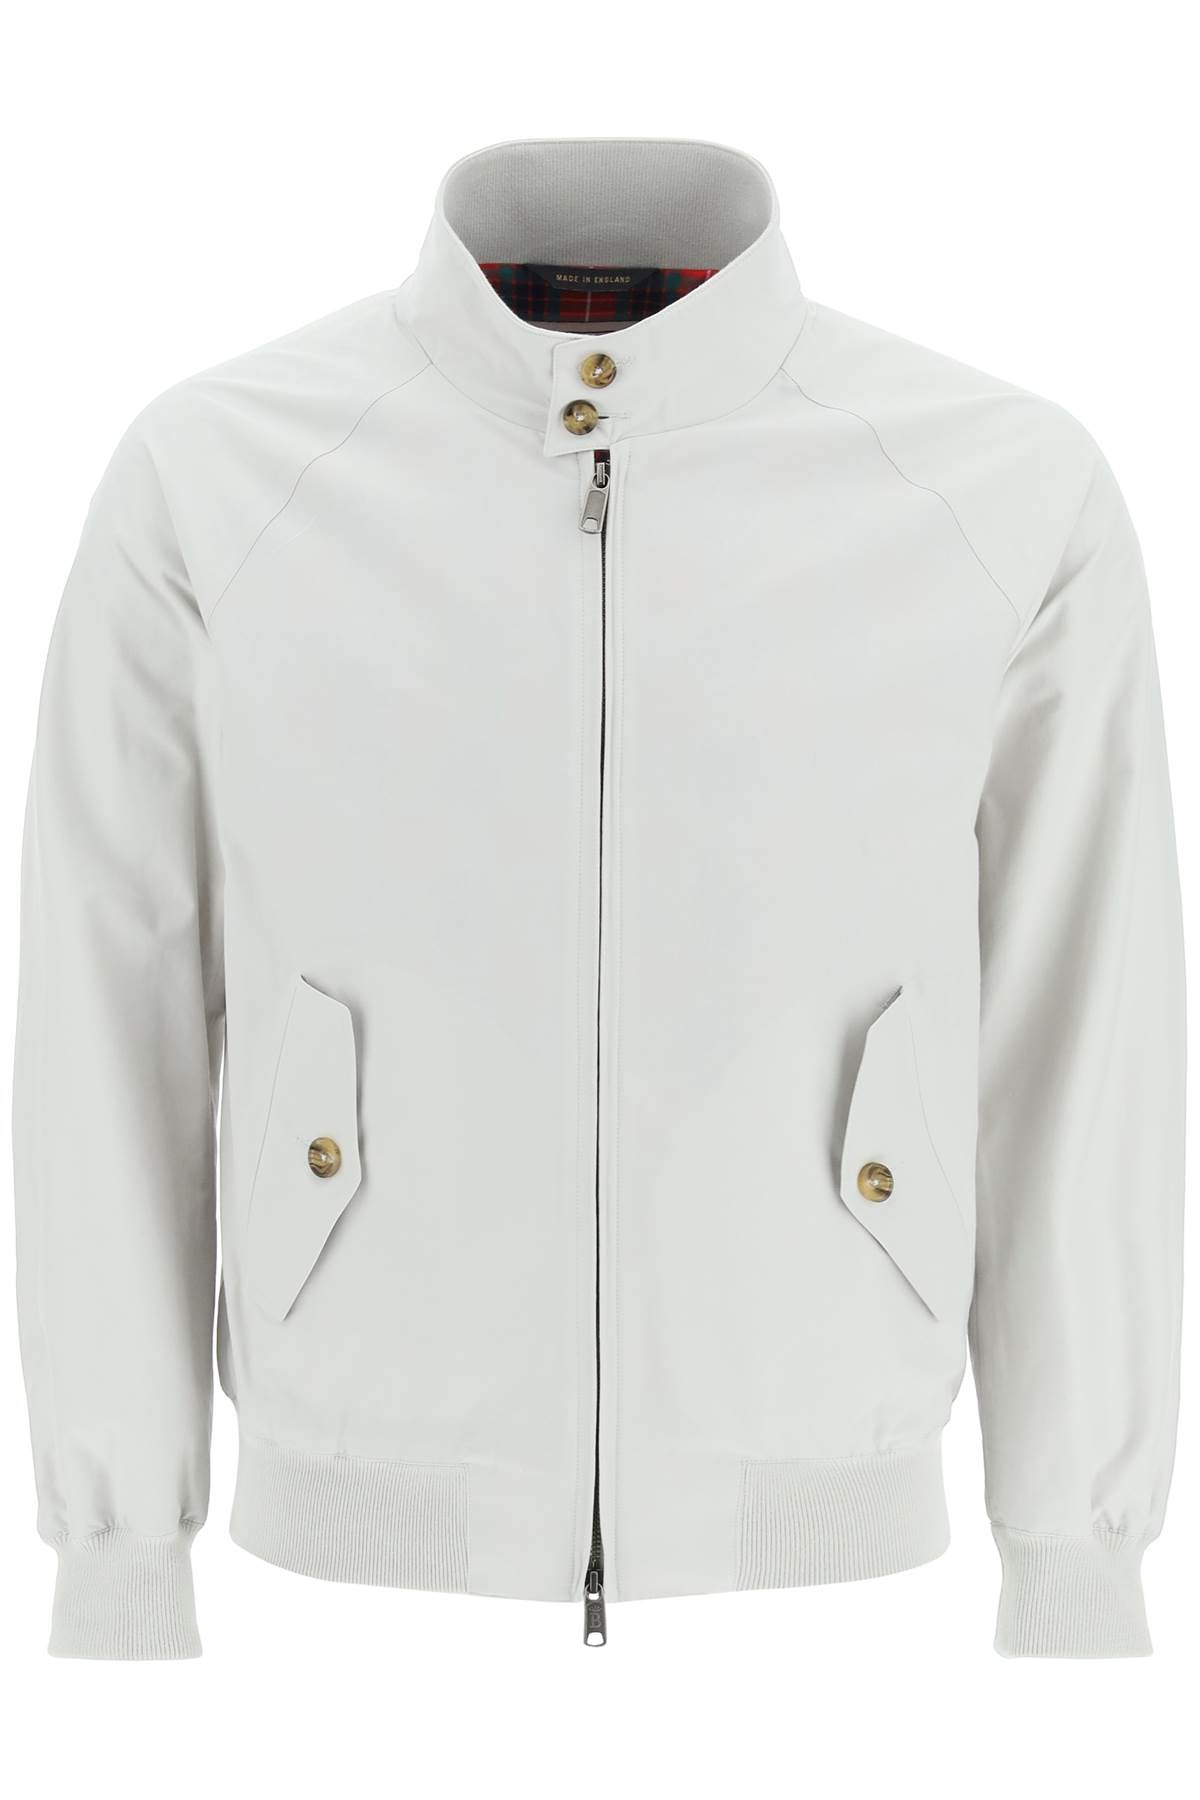 Baracuta g9 harrington jacket-0